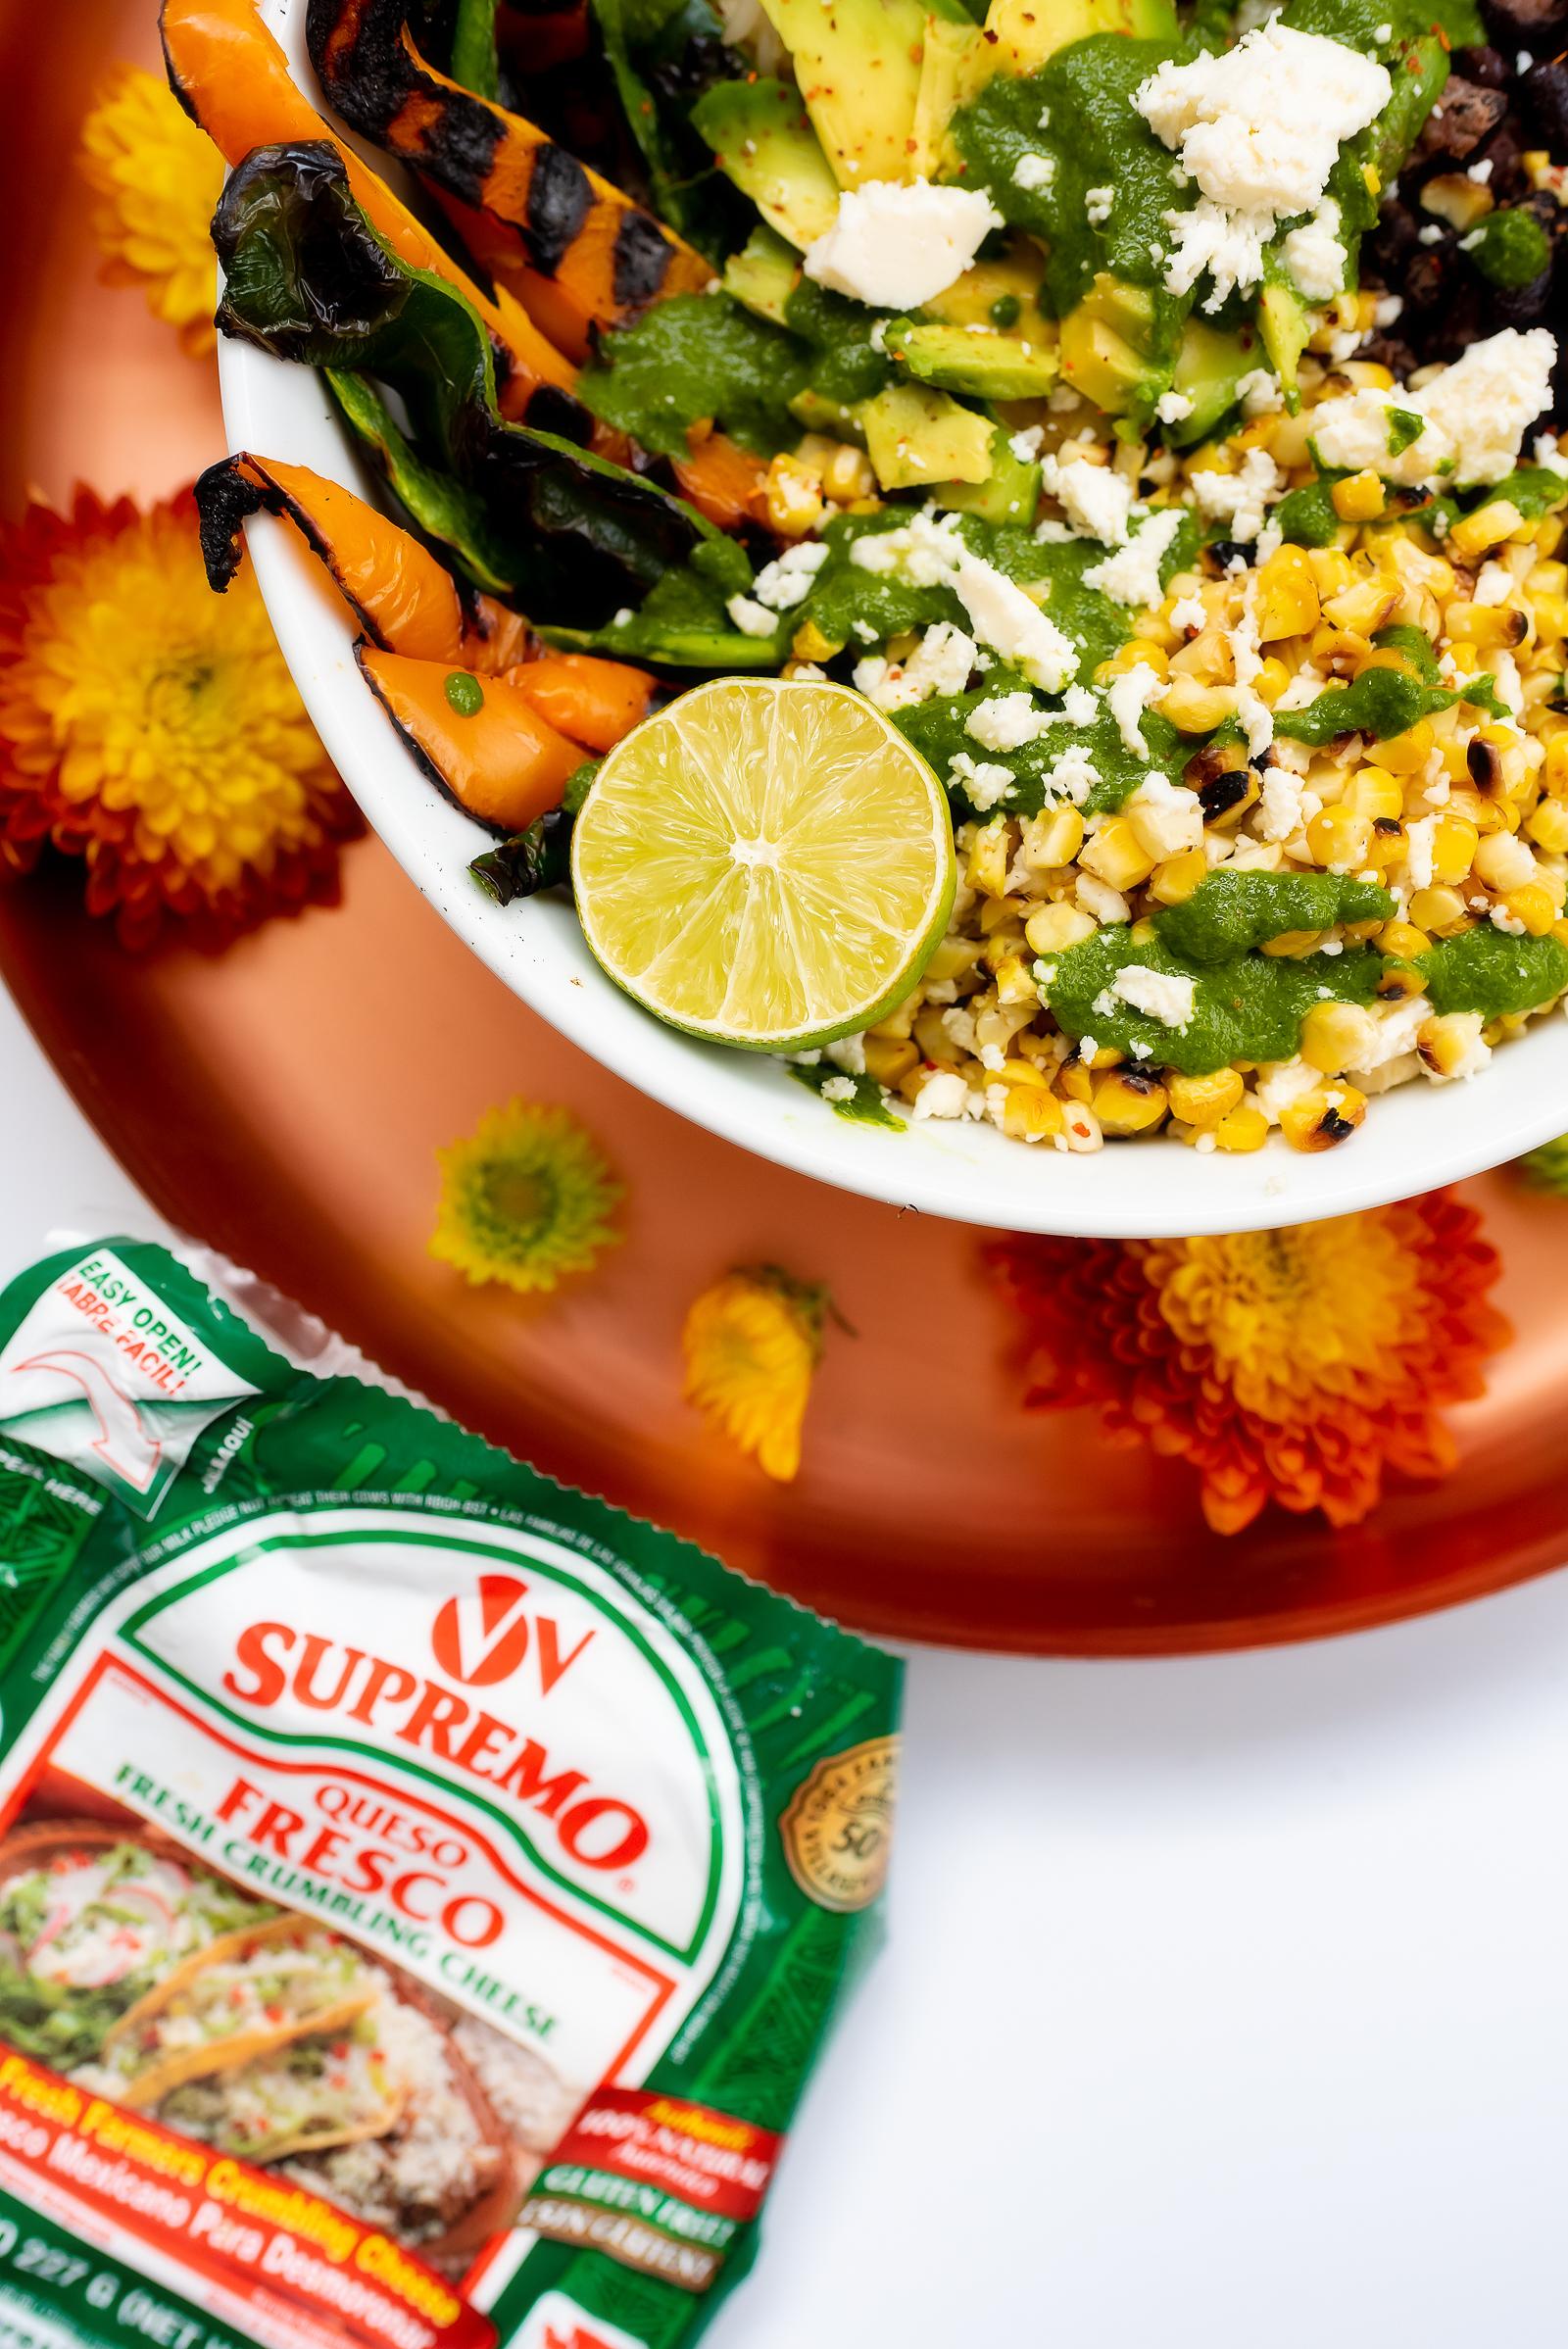 Poblano & Elotes Burrito Bowl Recipe with V&V Supremo